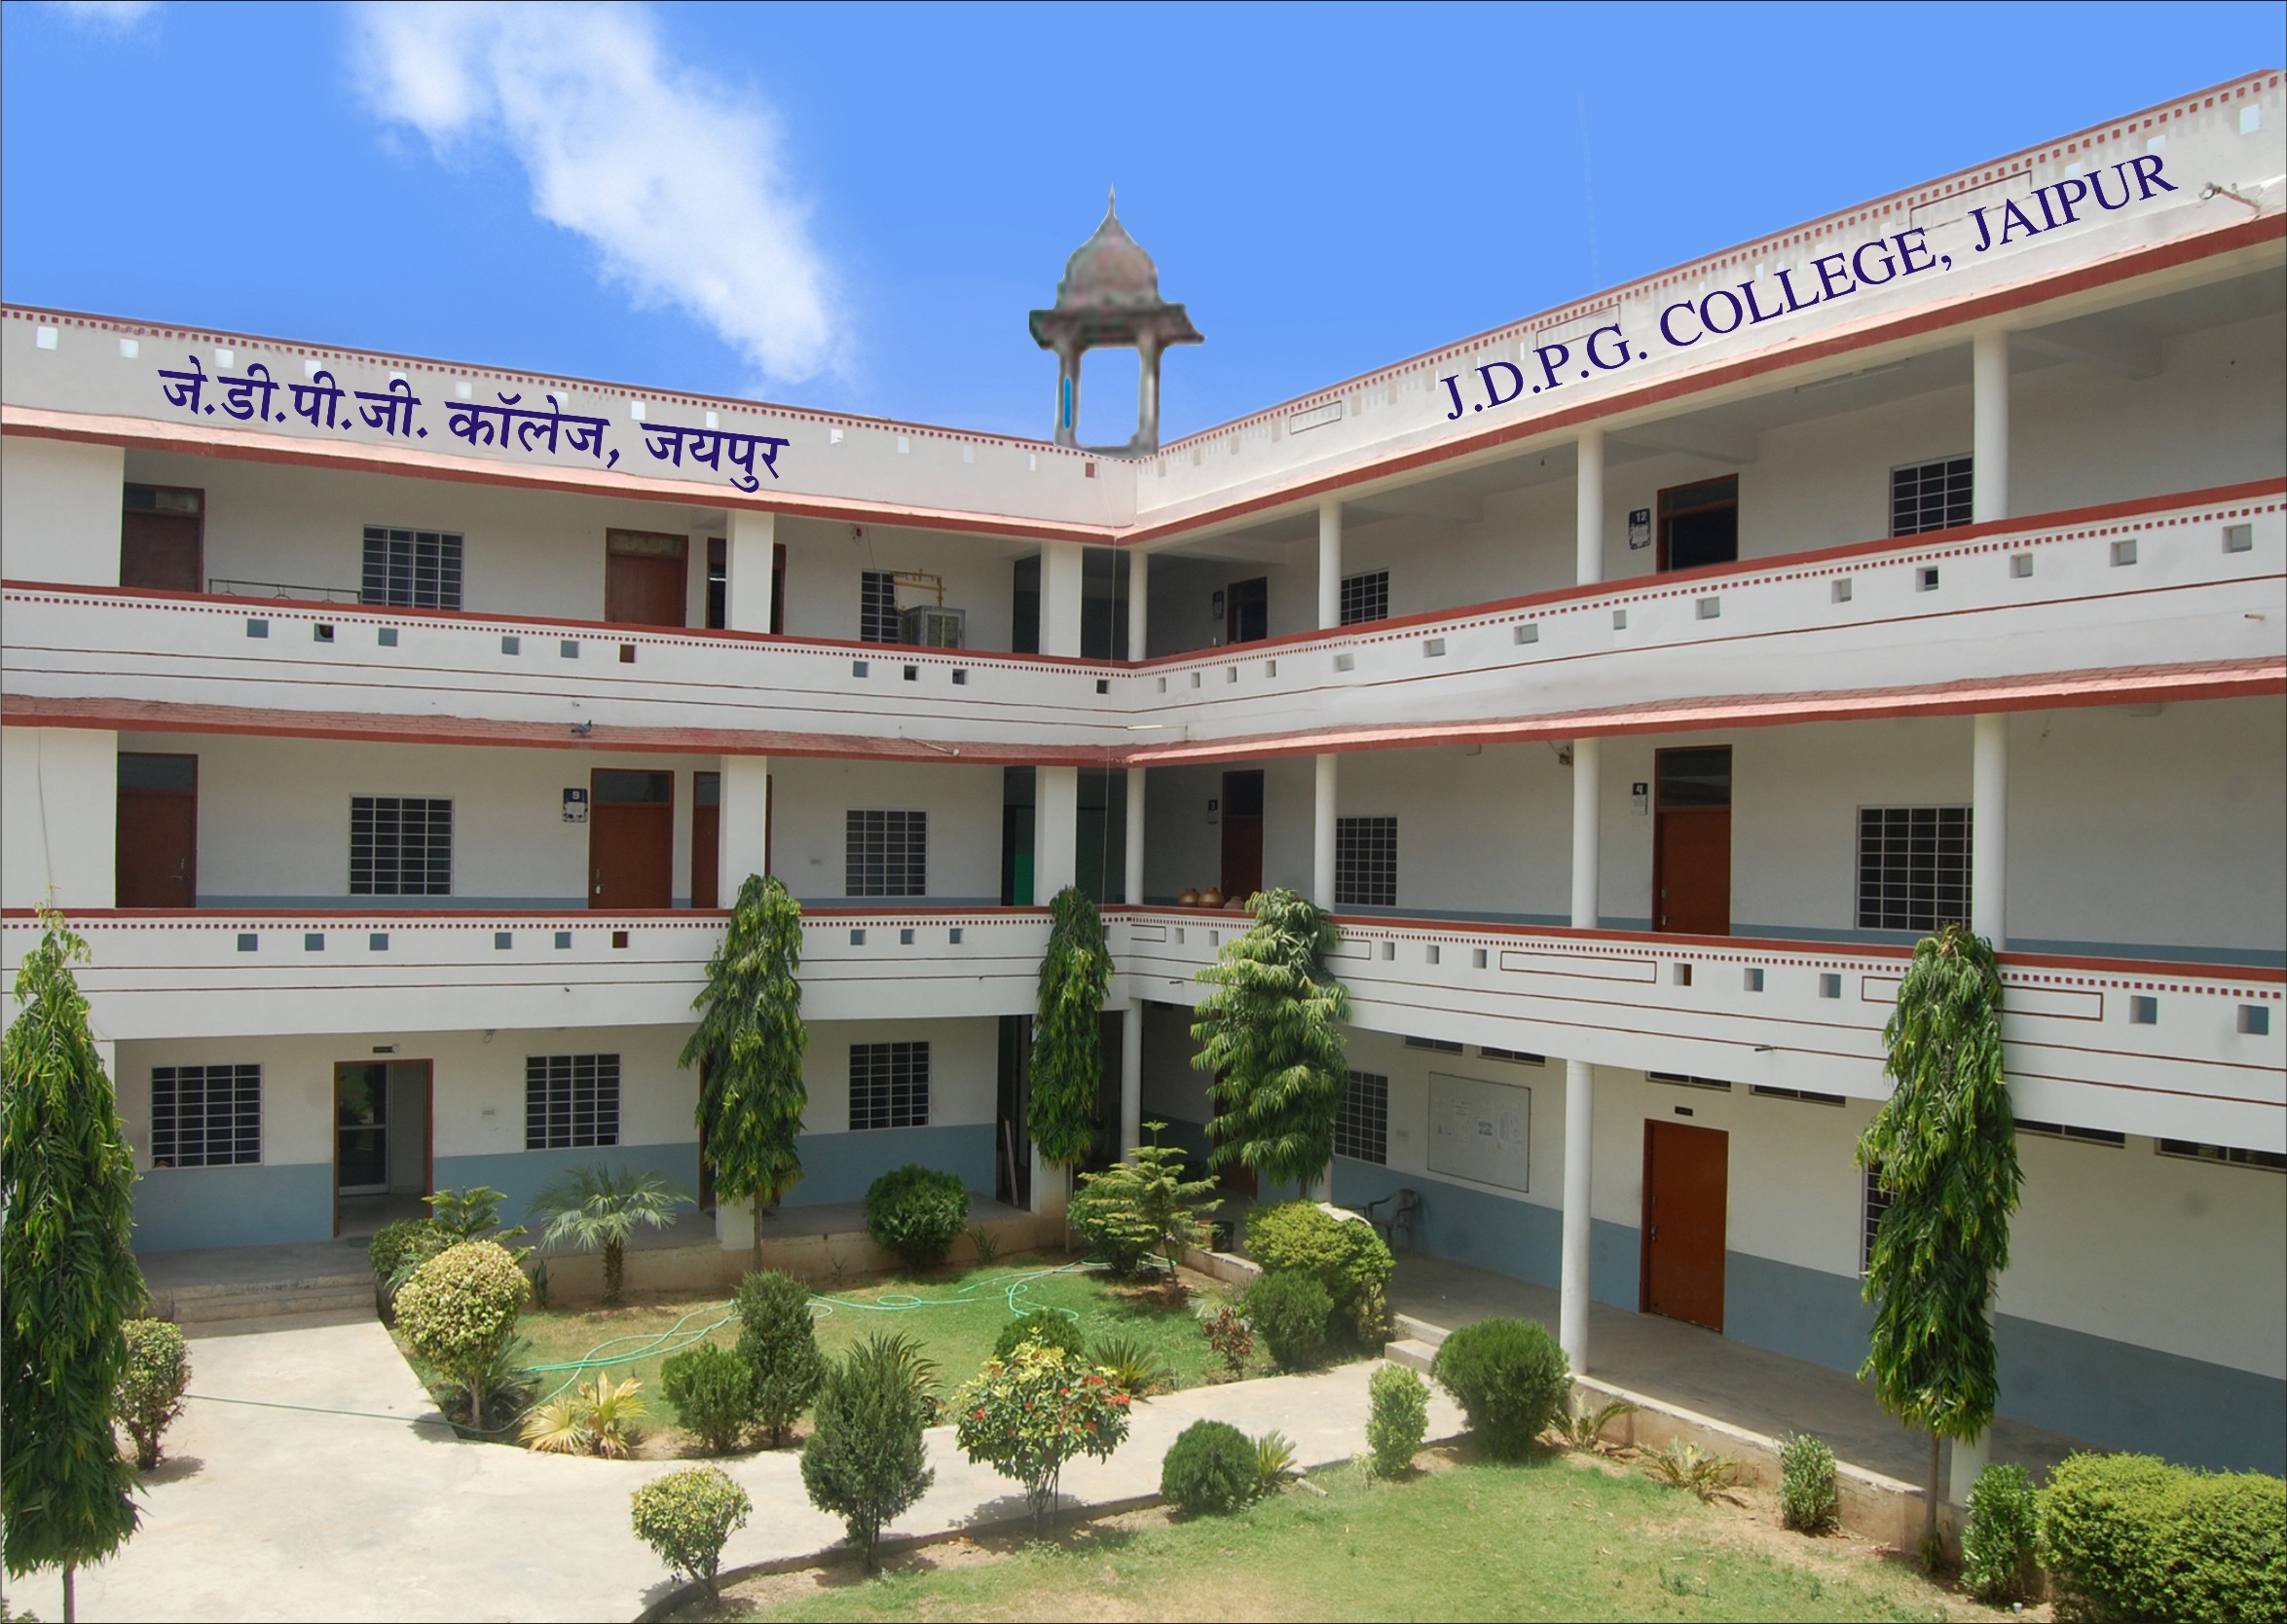 J.D. P.G. College, Jaipur Image